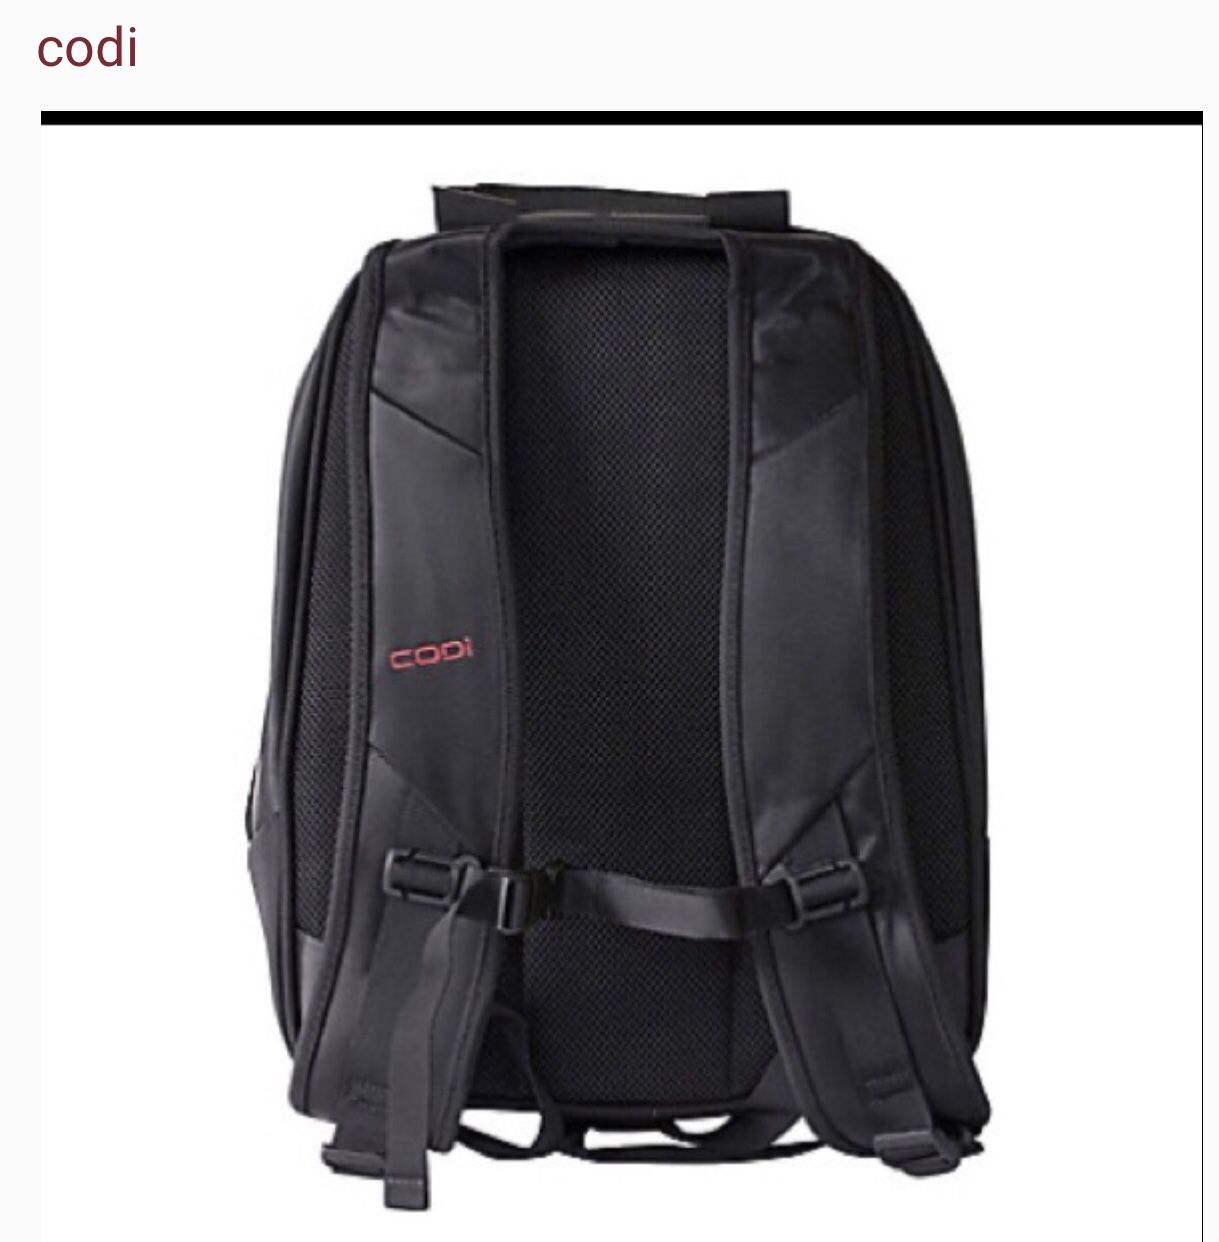 Code i laptop backpack new